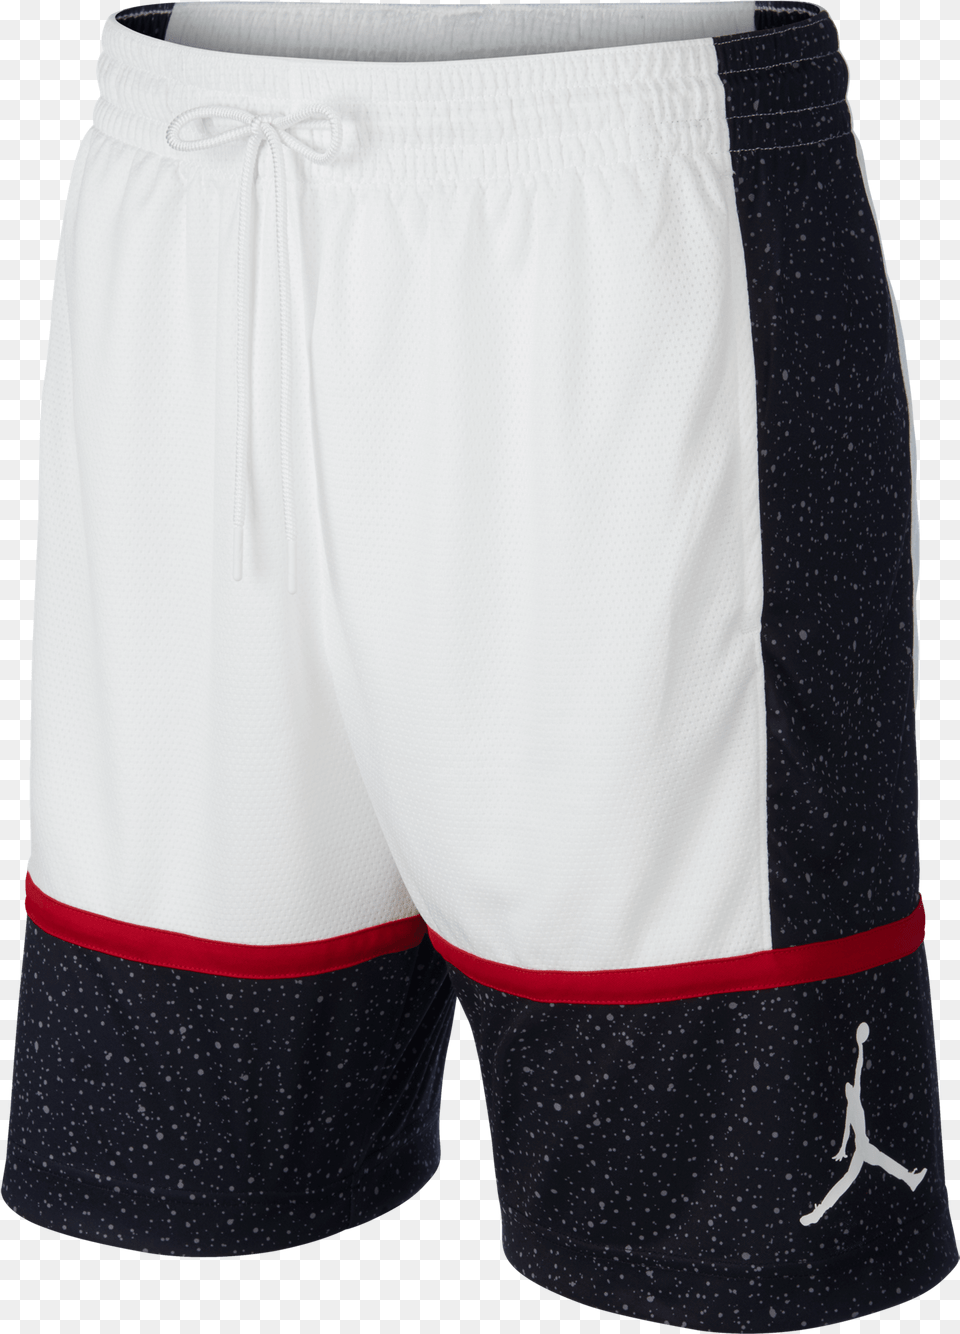 Air Jordan Jumpman Graphic Basketball Shorts, Clothing, Swimming Trunks Png Image